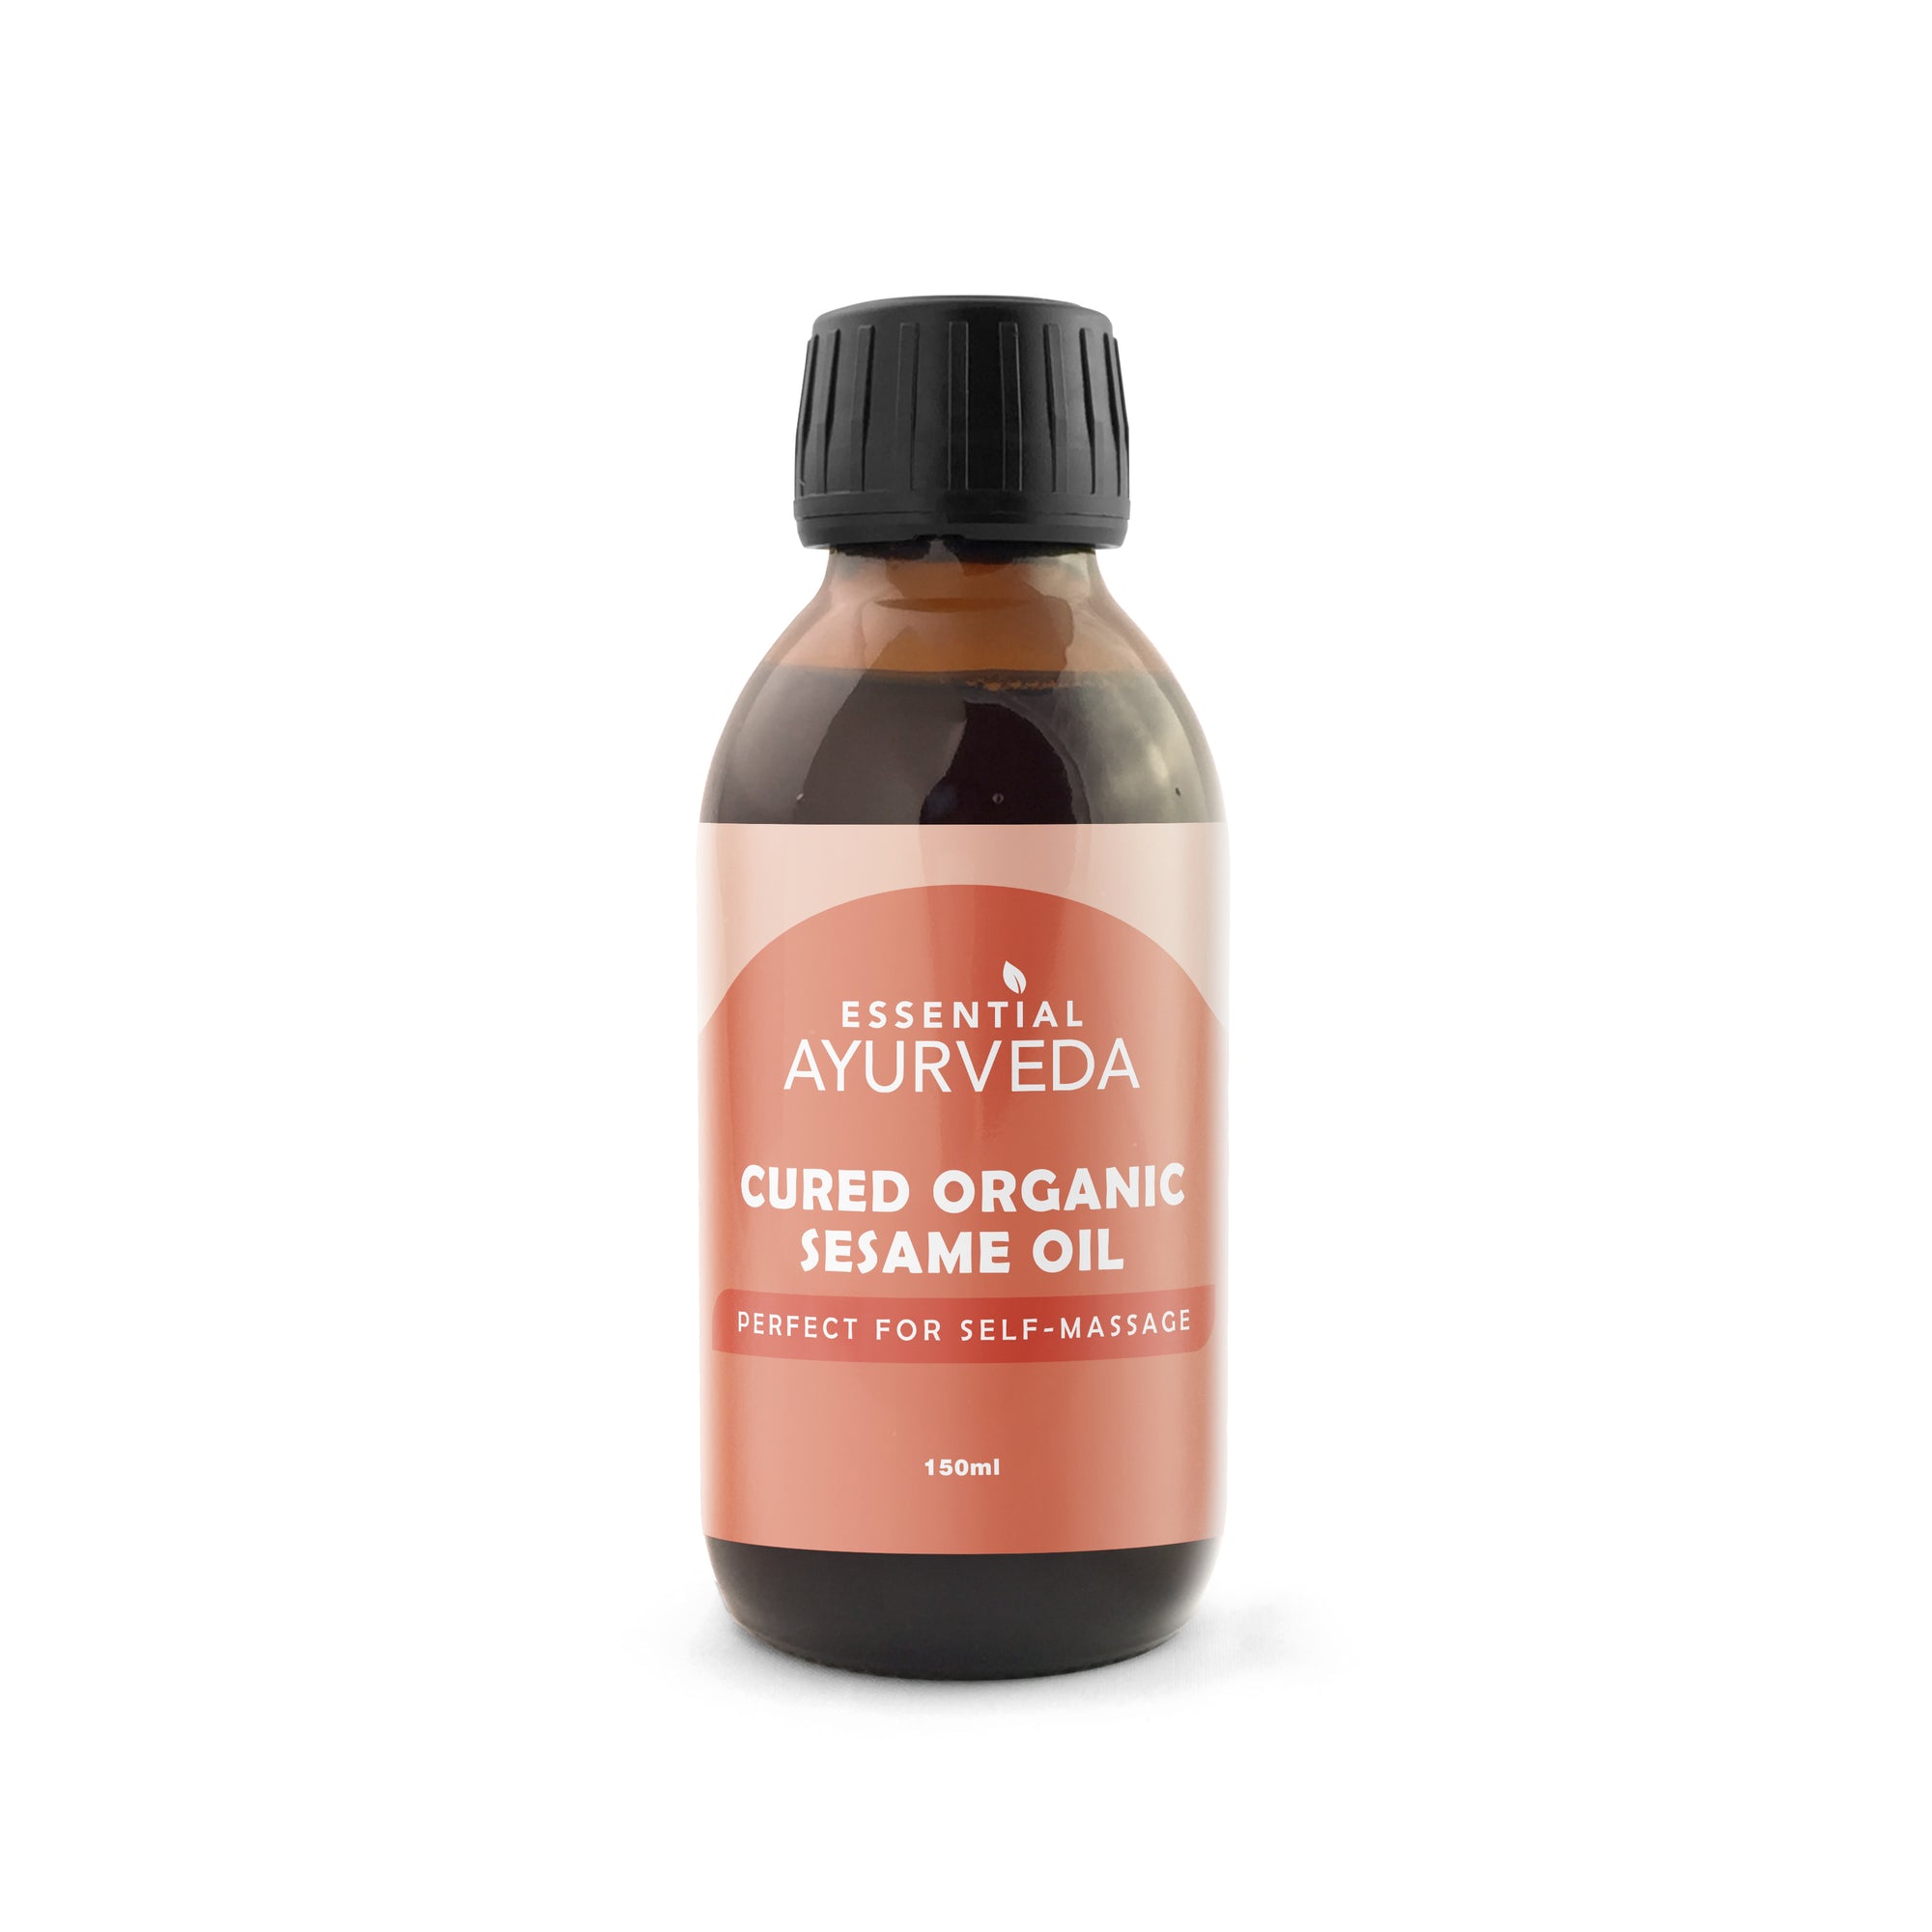 Cured Organic Sesame Oil - perfect for abhyangha self-massage